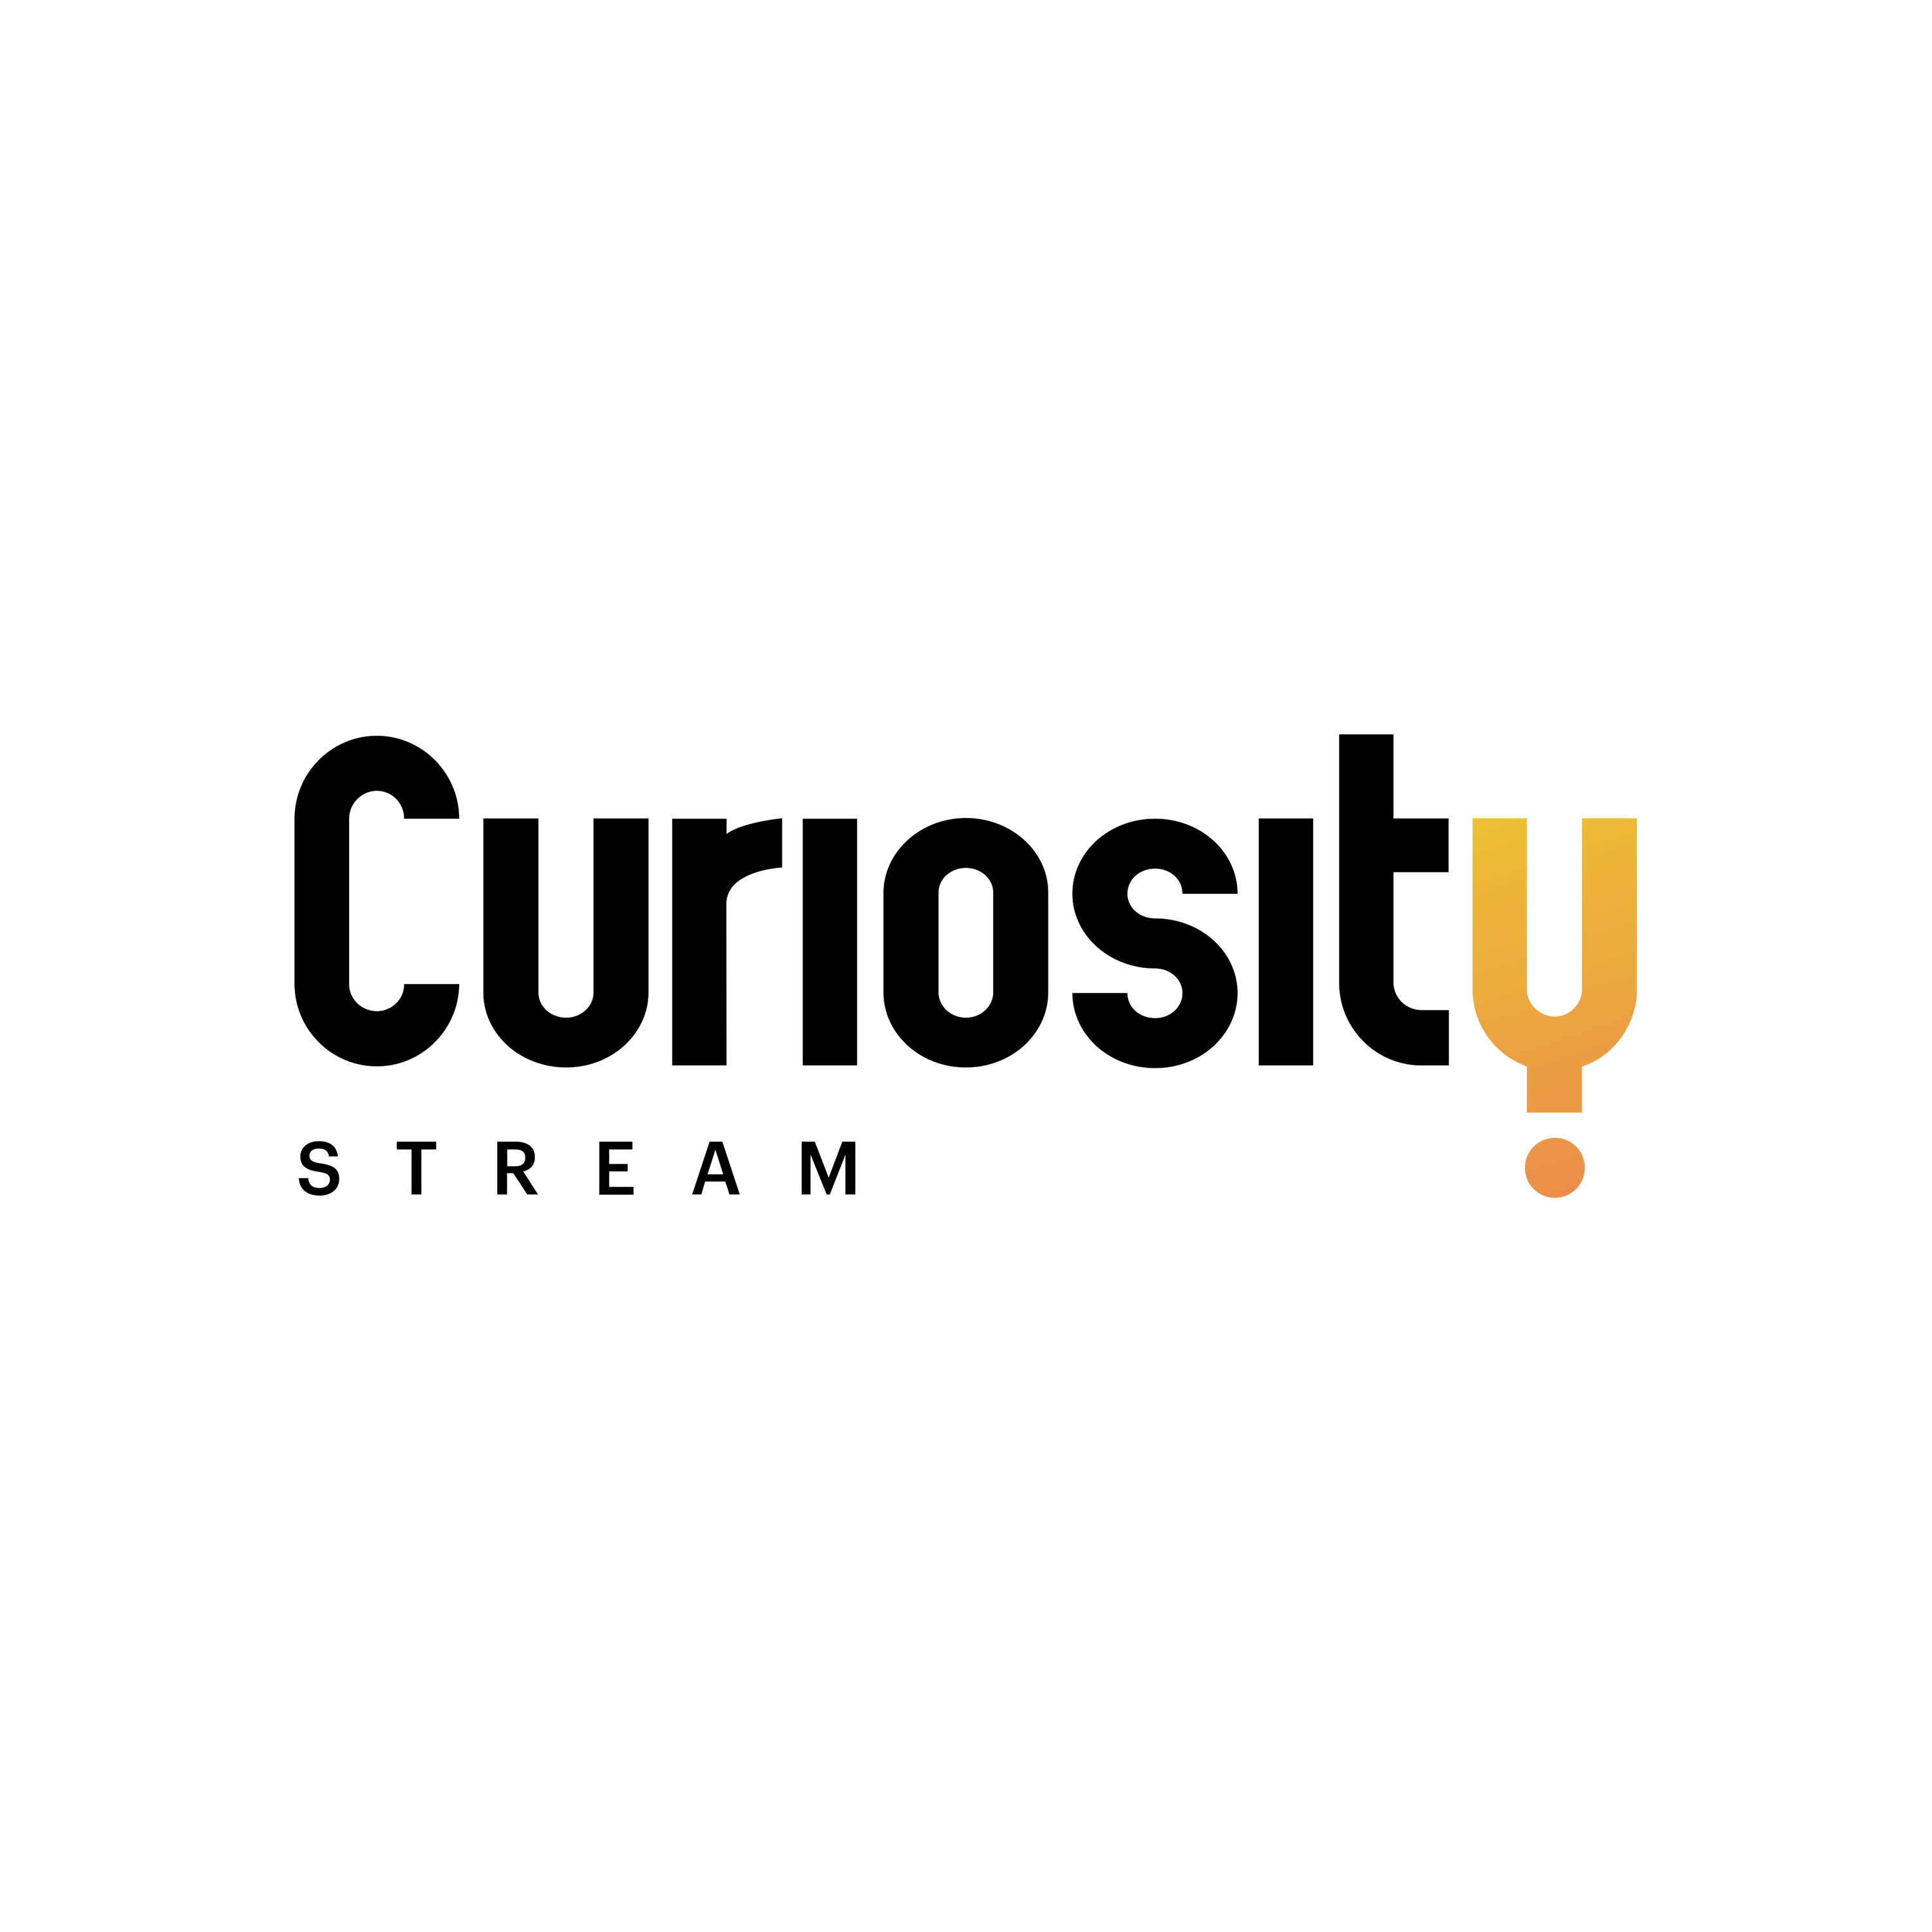 Curiosity Stream Logo Transparent Photo